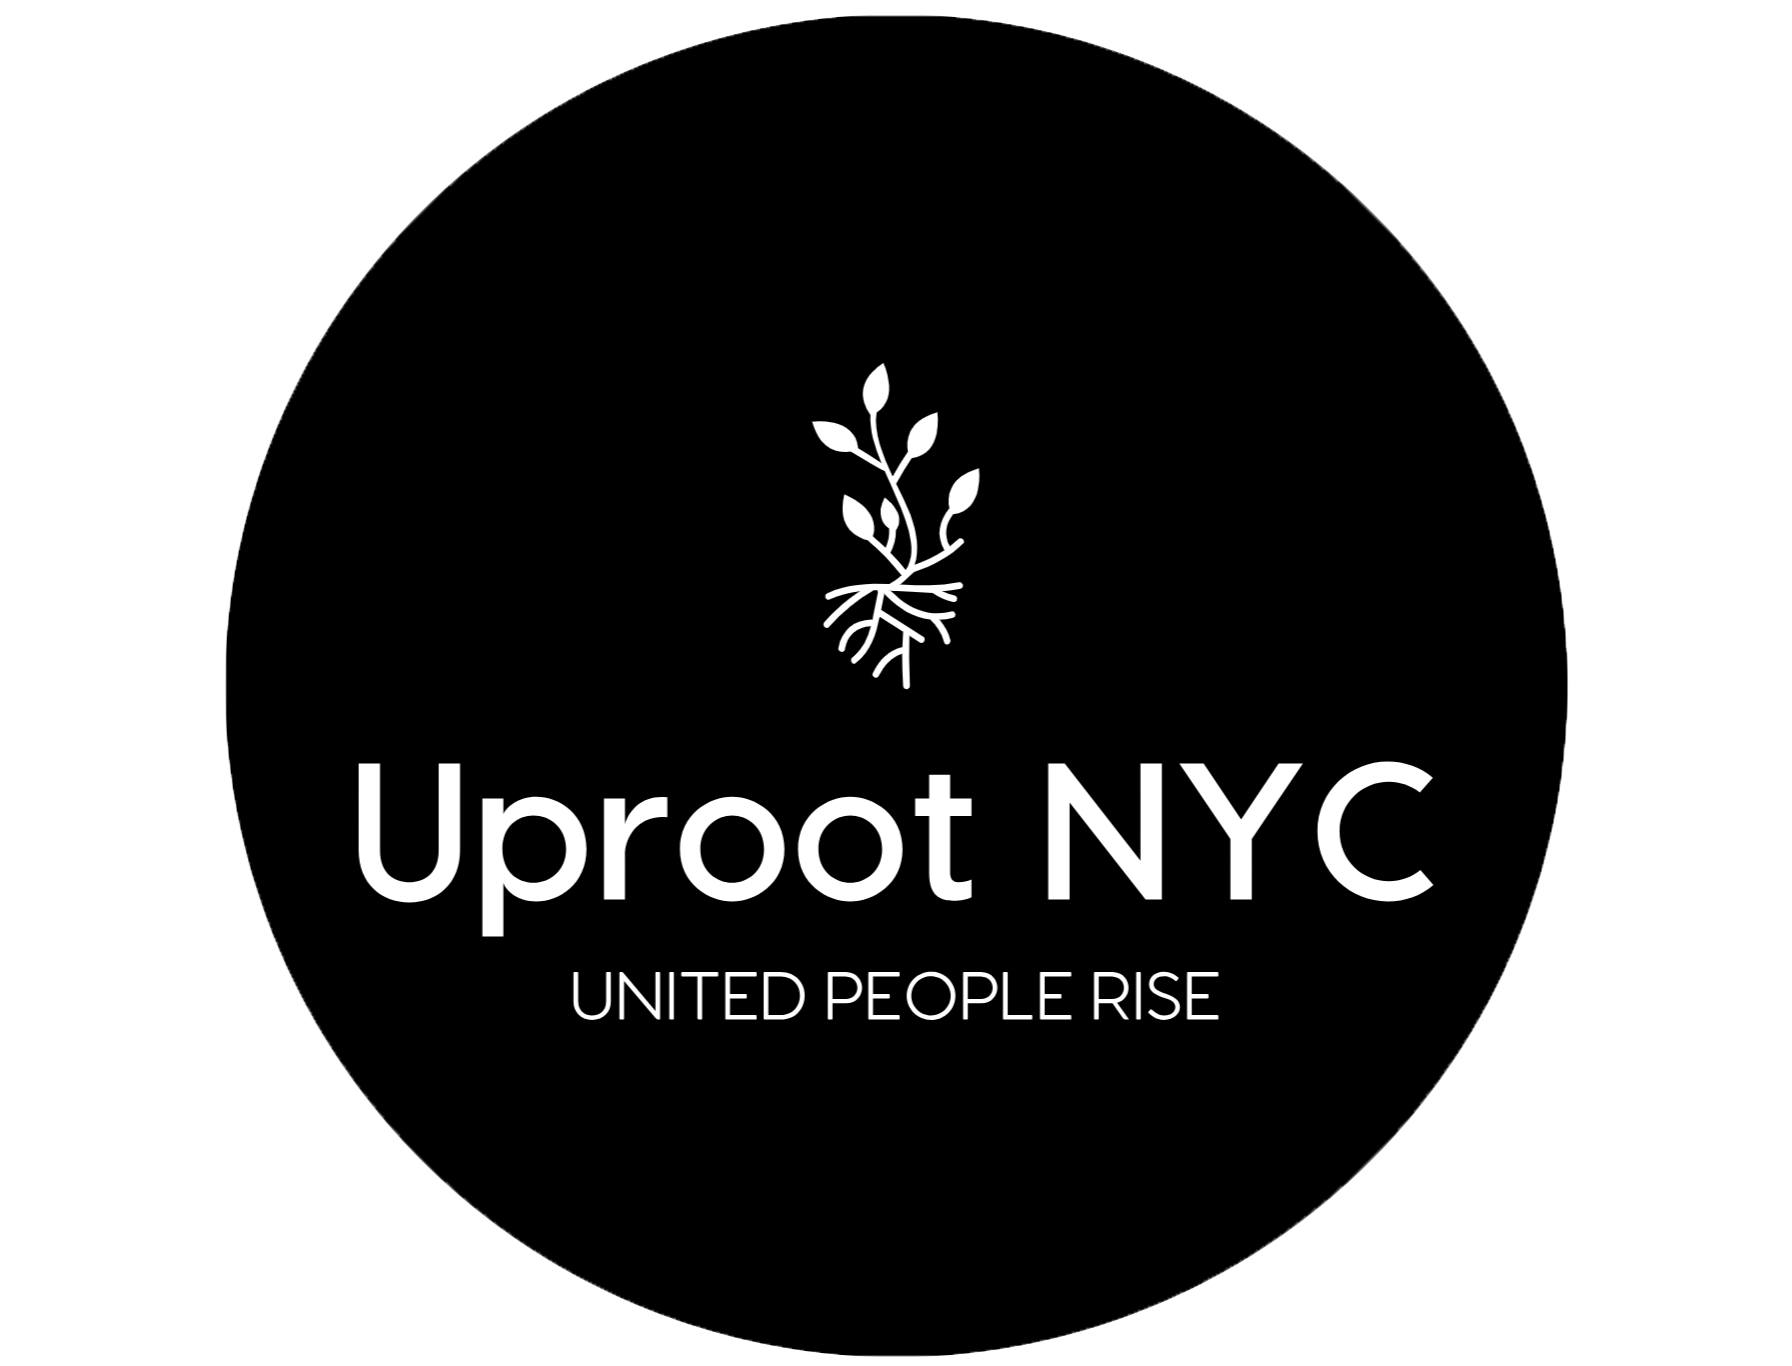 UPROOT NYC